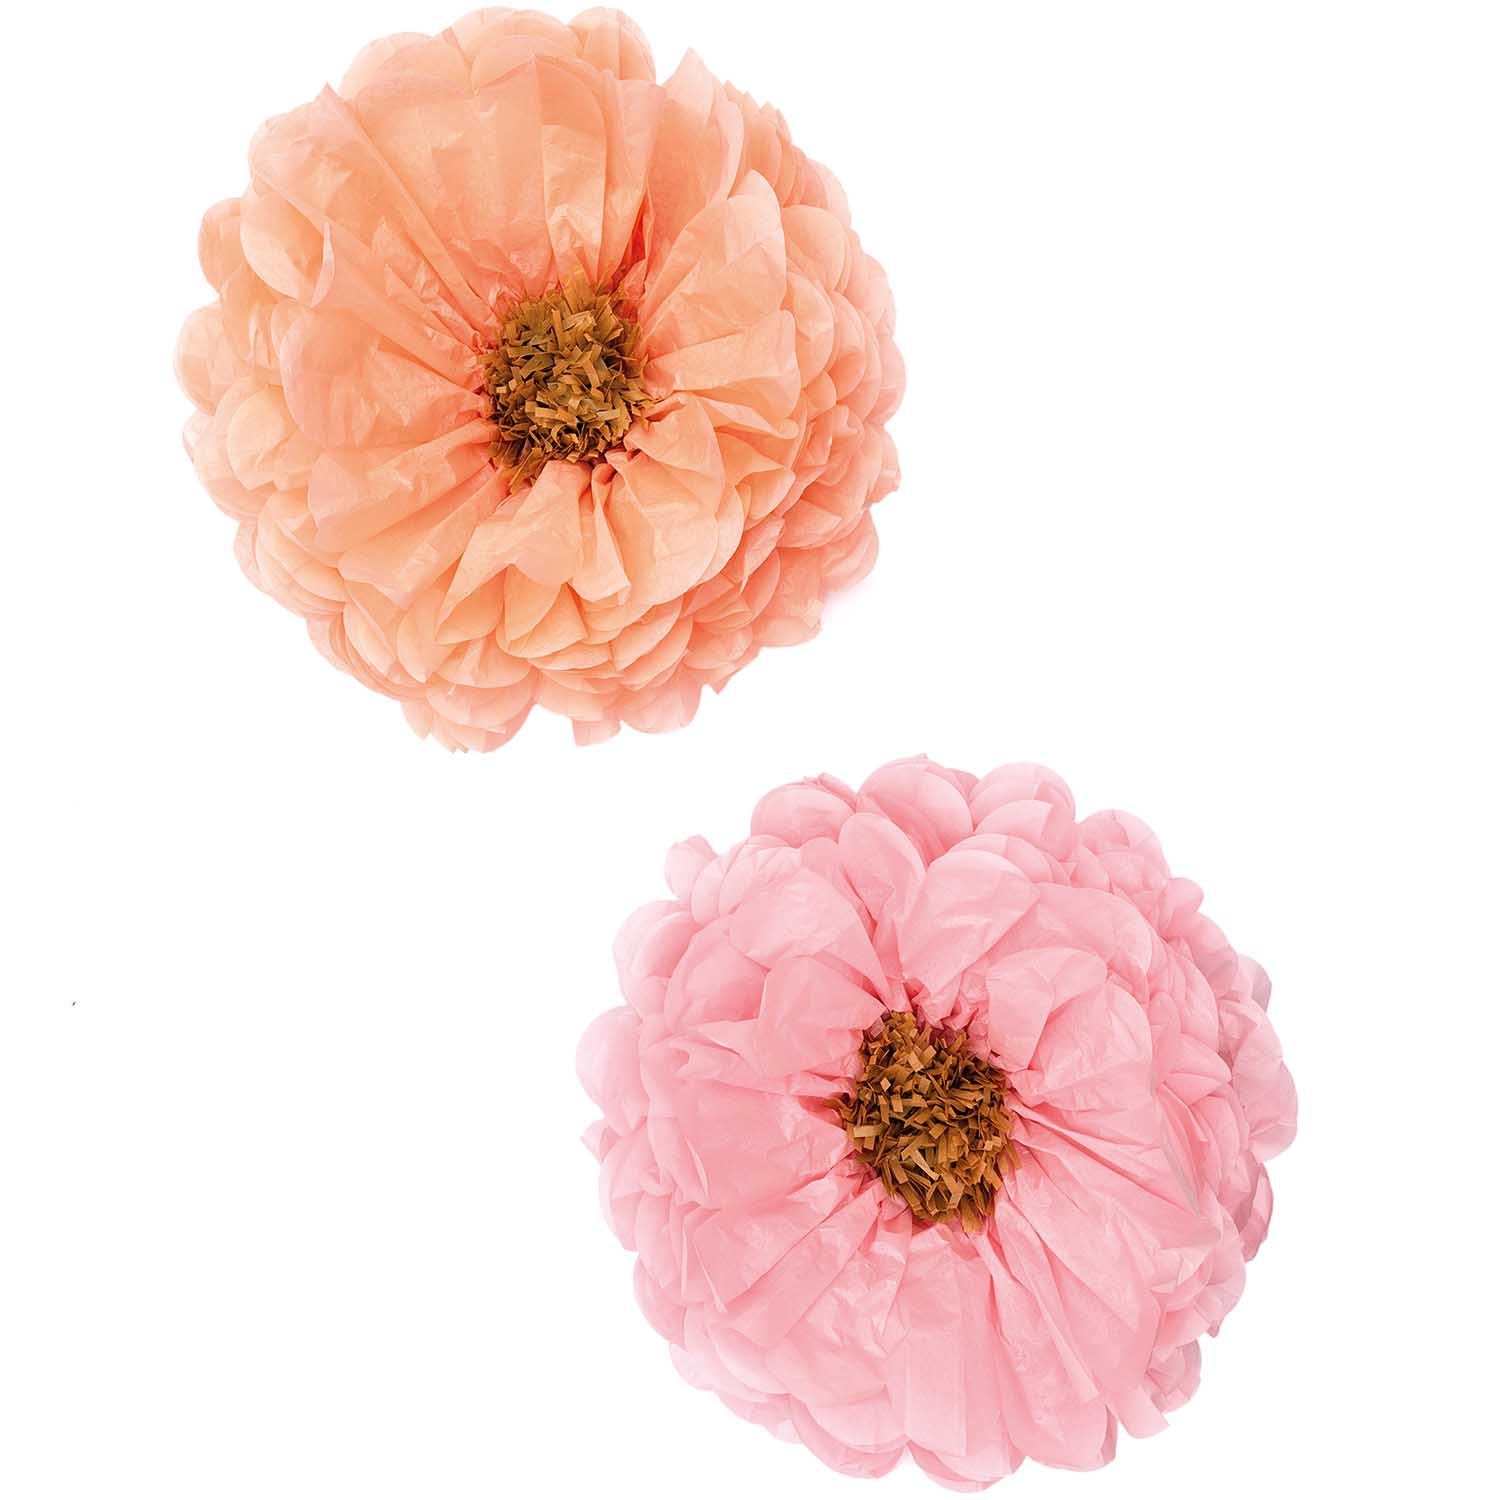 Tissue papier bloemen zacht roze en zacht oranje (Ø 40cm)